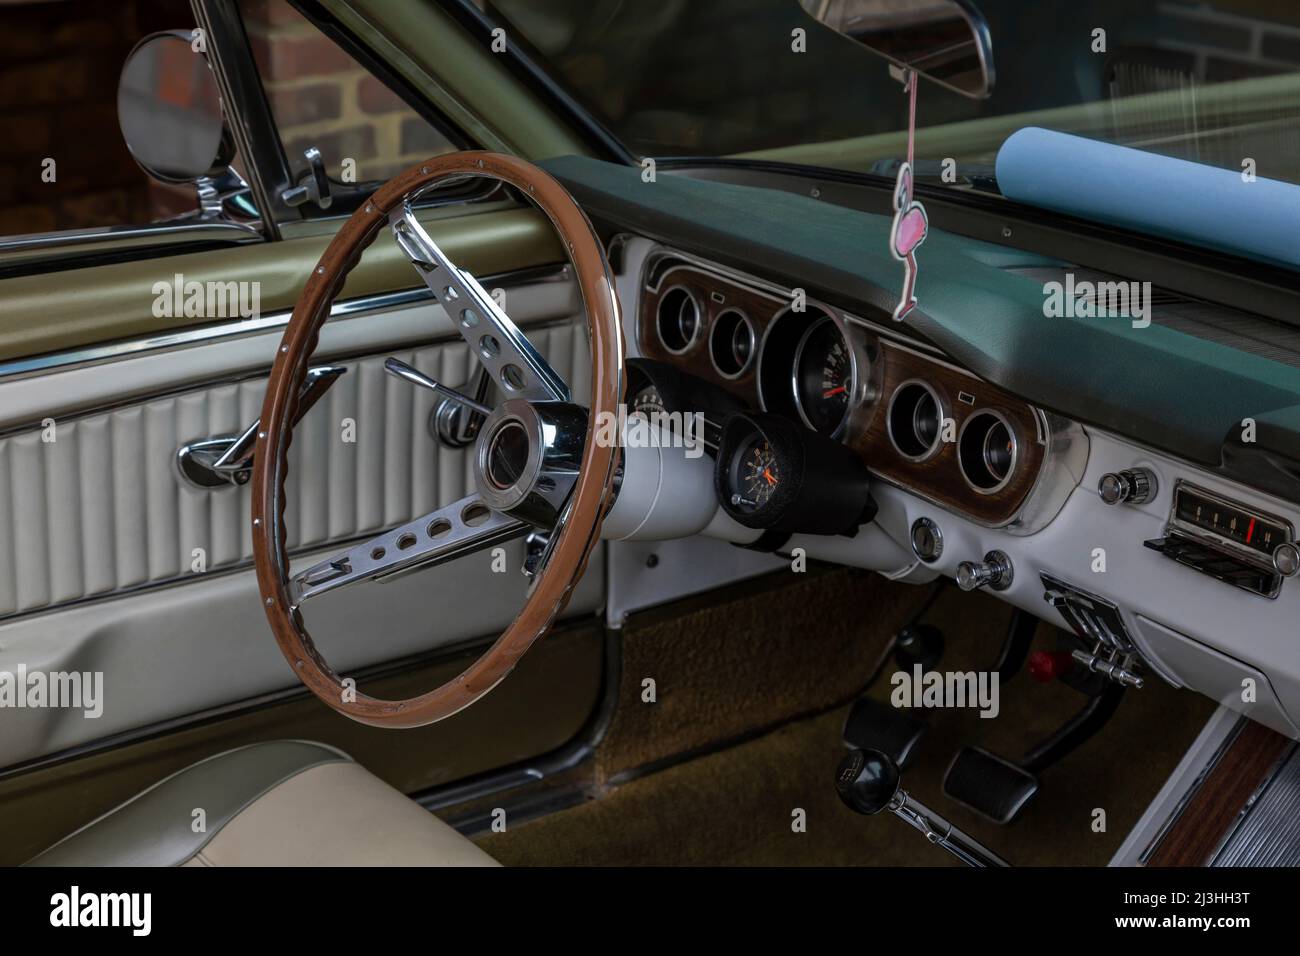 Vintage car, brown steering wheel, dashboard, green interior trim, detail Stock Photo